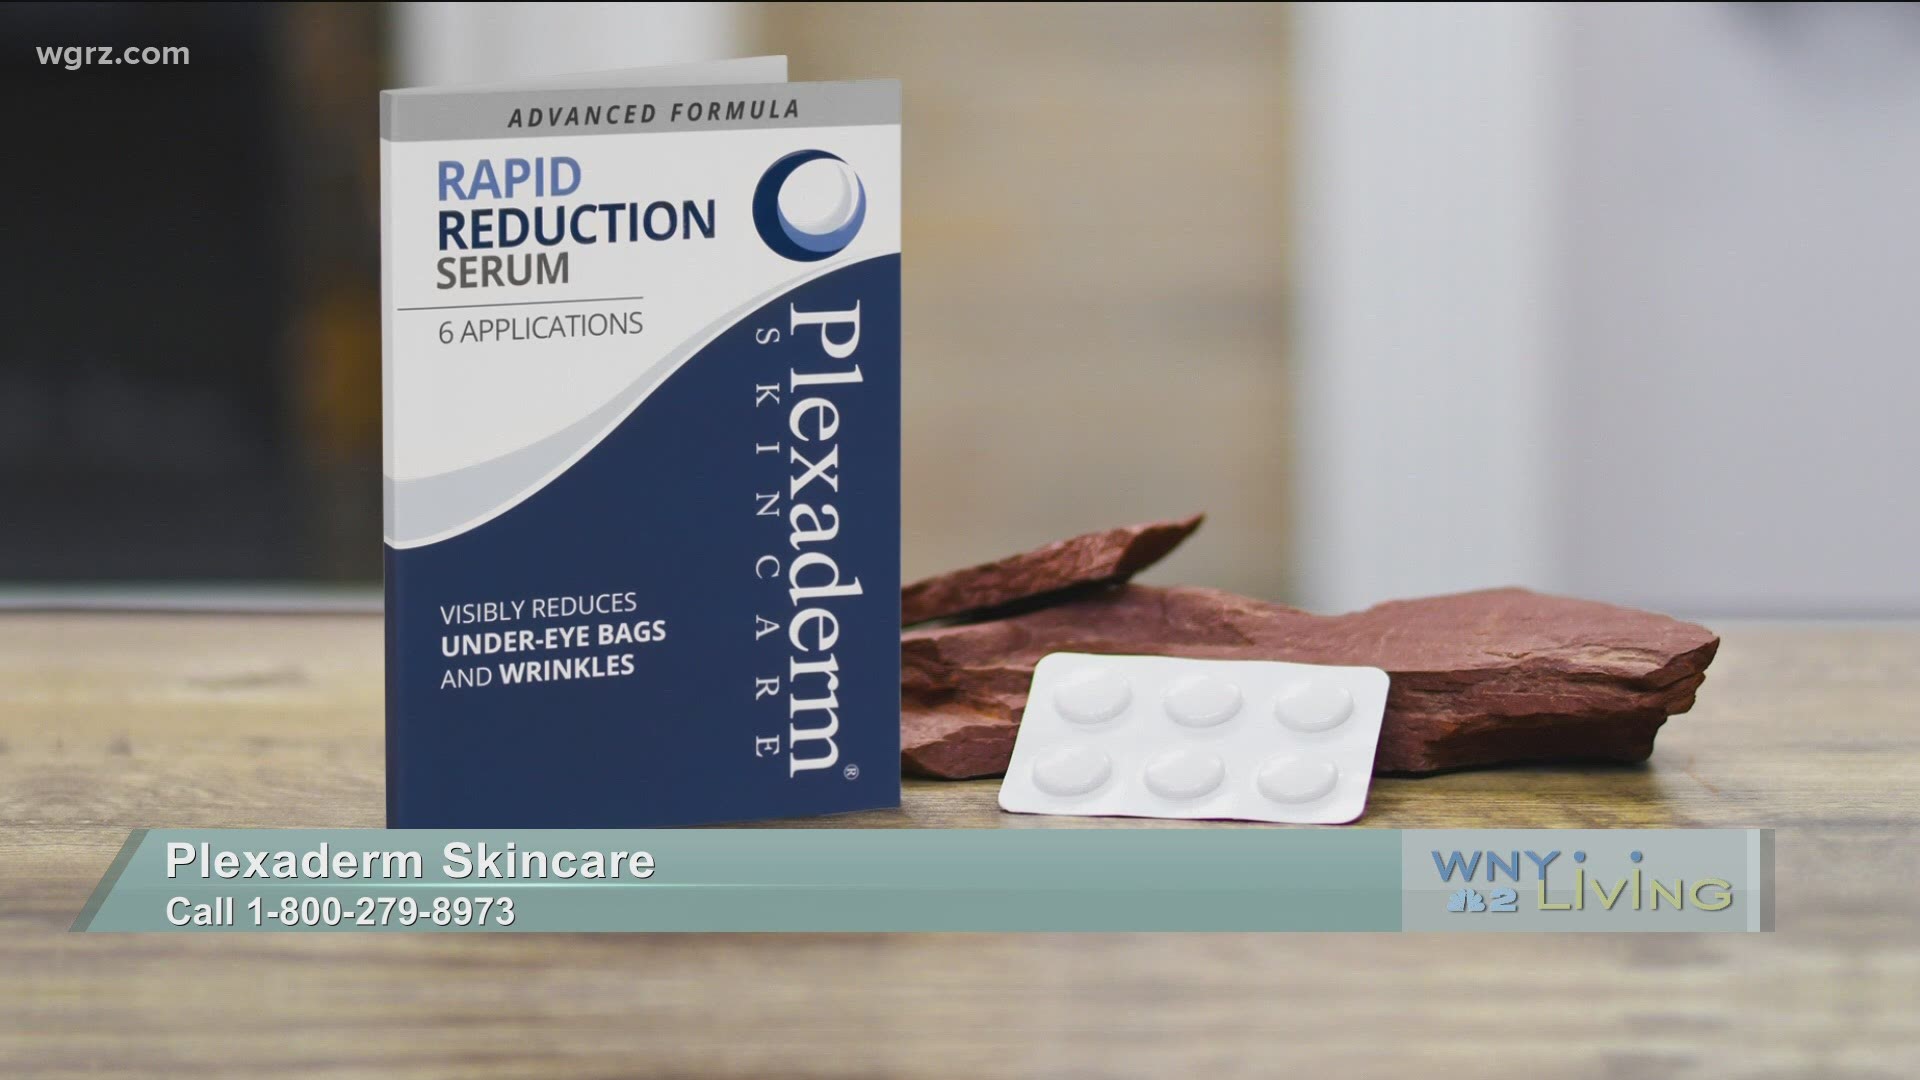 WNY Living - September 26 - Plexaderm Skincare (THIS VIDEO IS SPONSORED BY PLEXADERM SKINCARE)